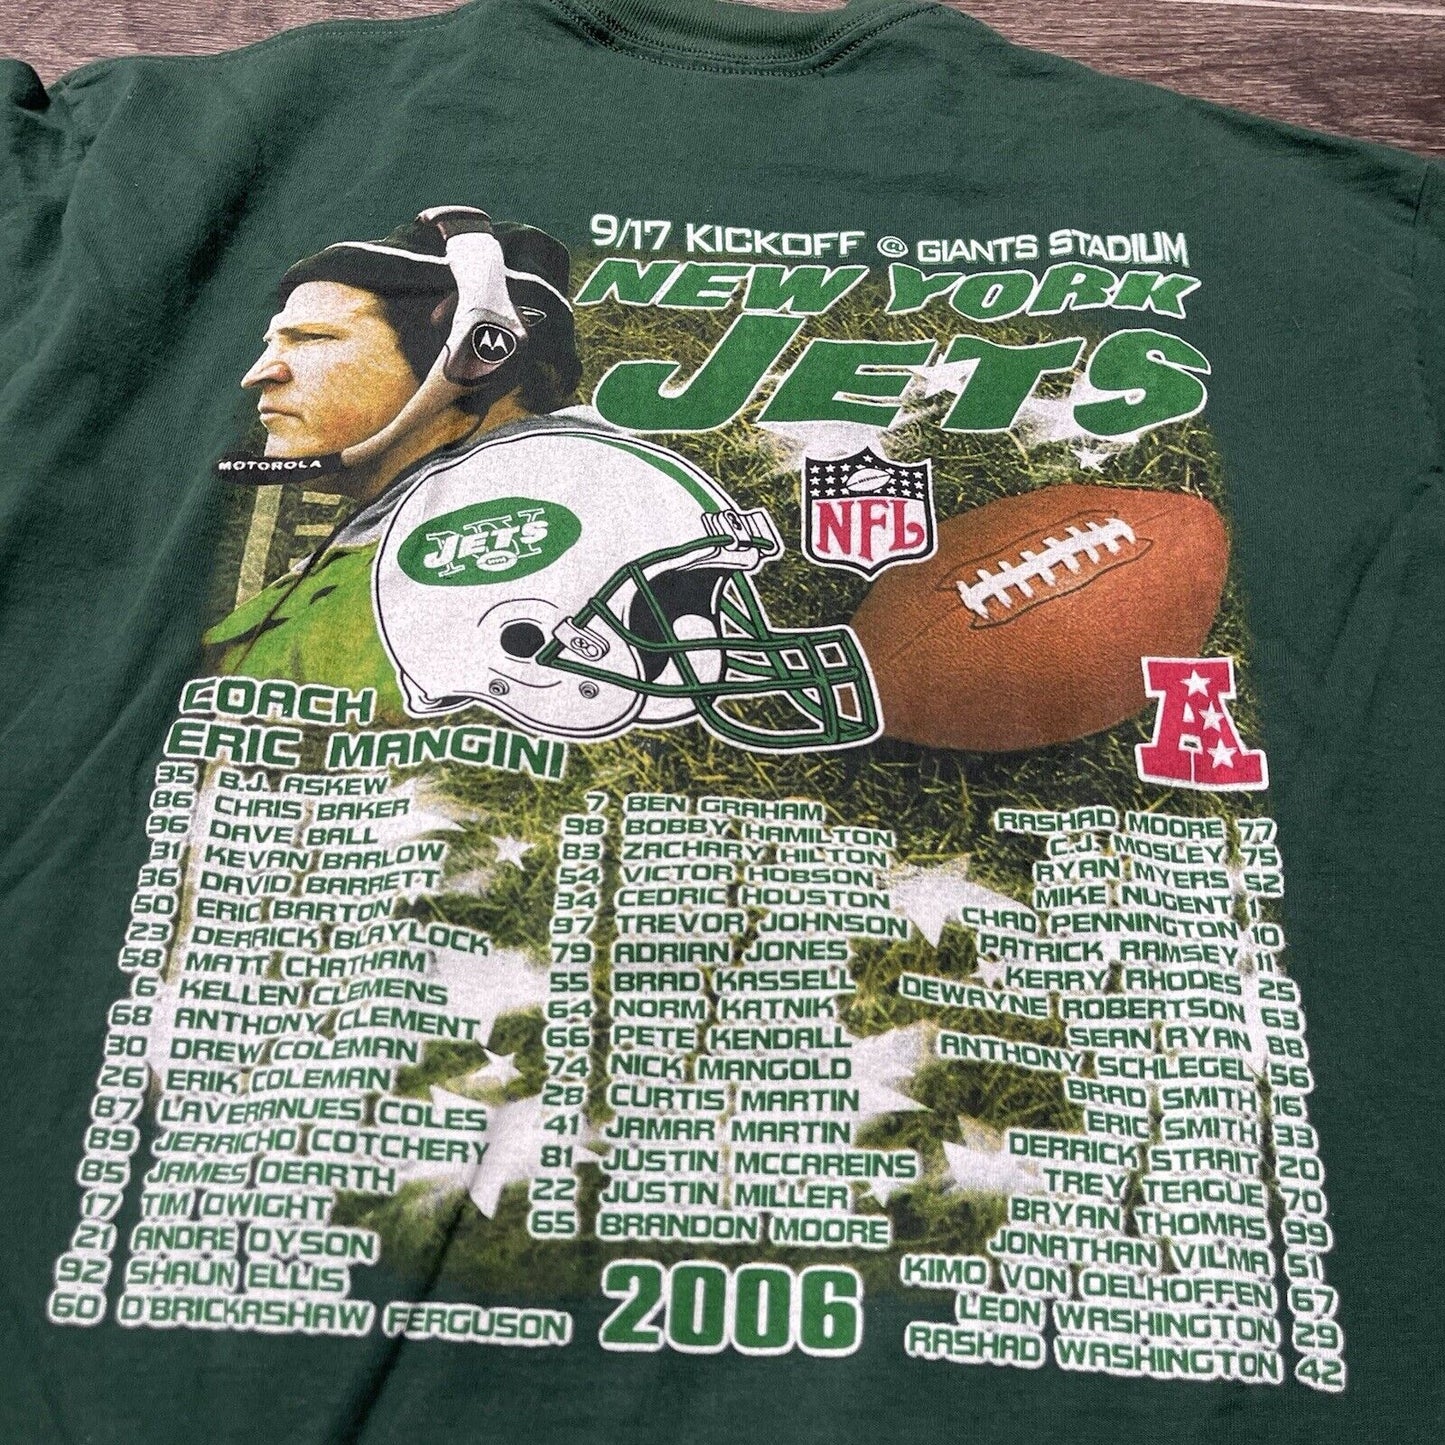 Mens New York Jets SS TShirt 2006 Kick Off @ Giants Stadium Green Graphics, Xxl